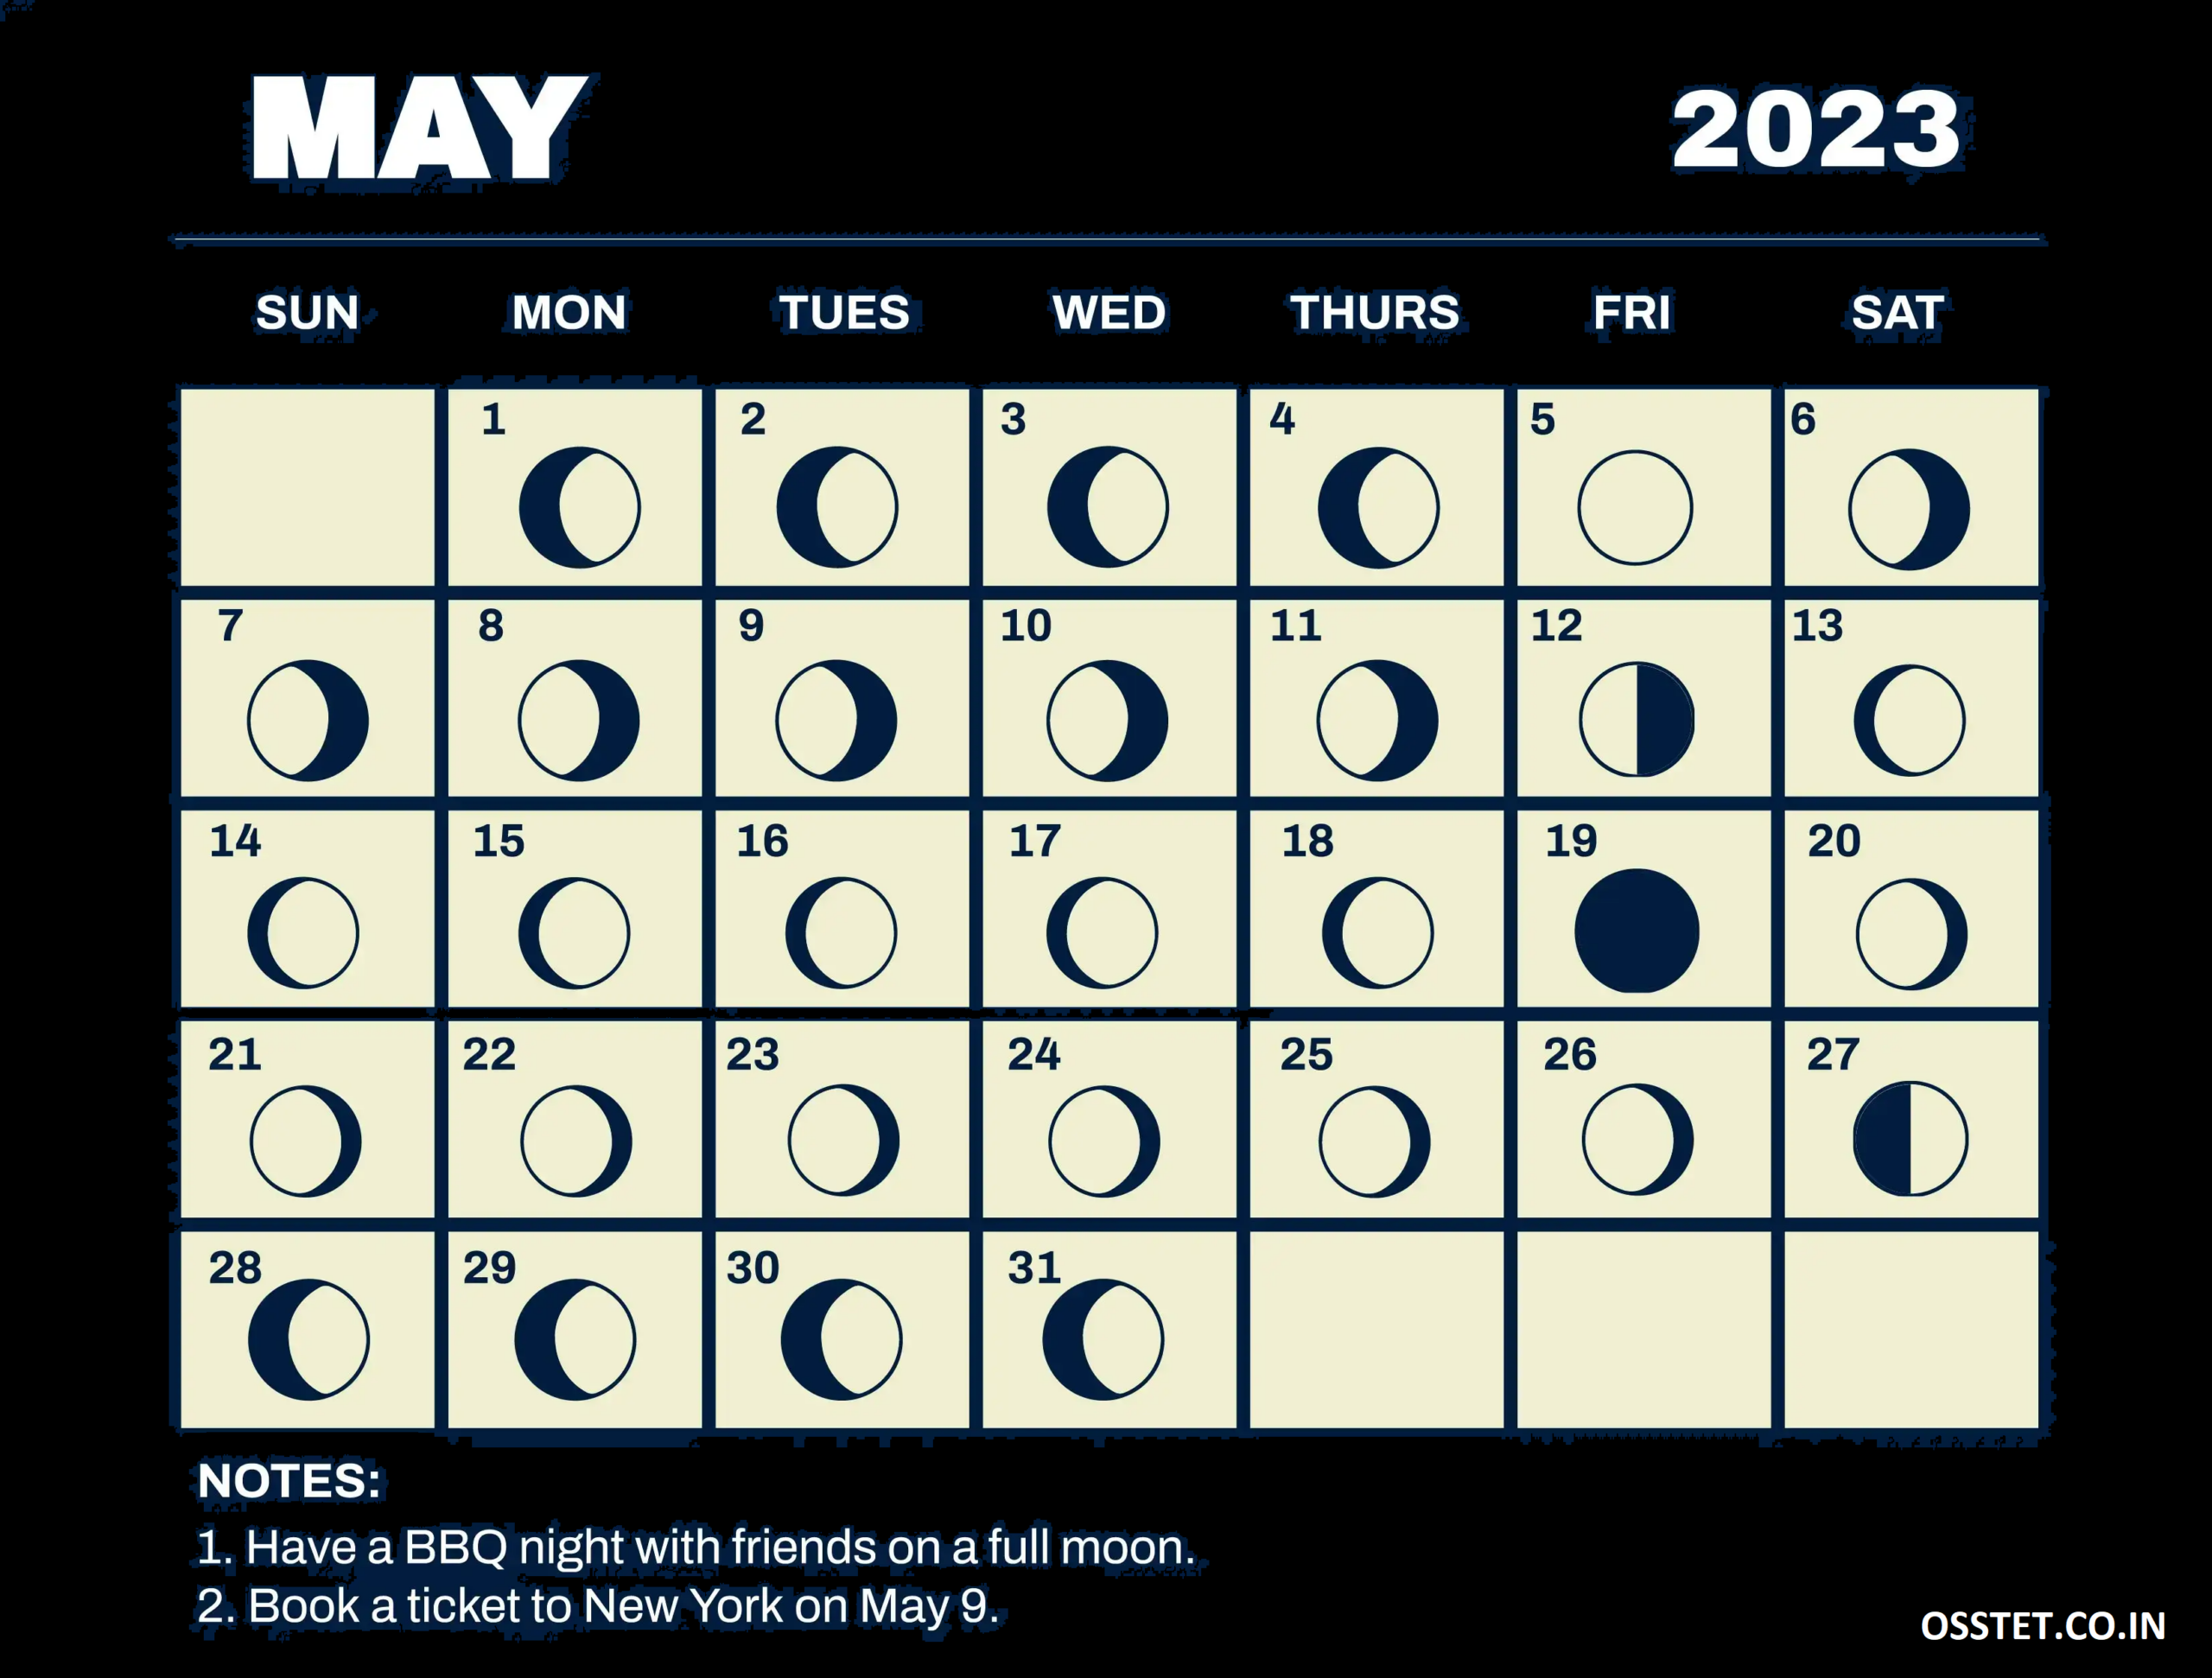 May 2023 calendar moon phases